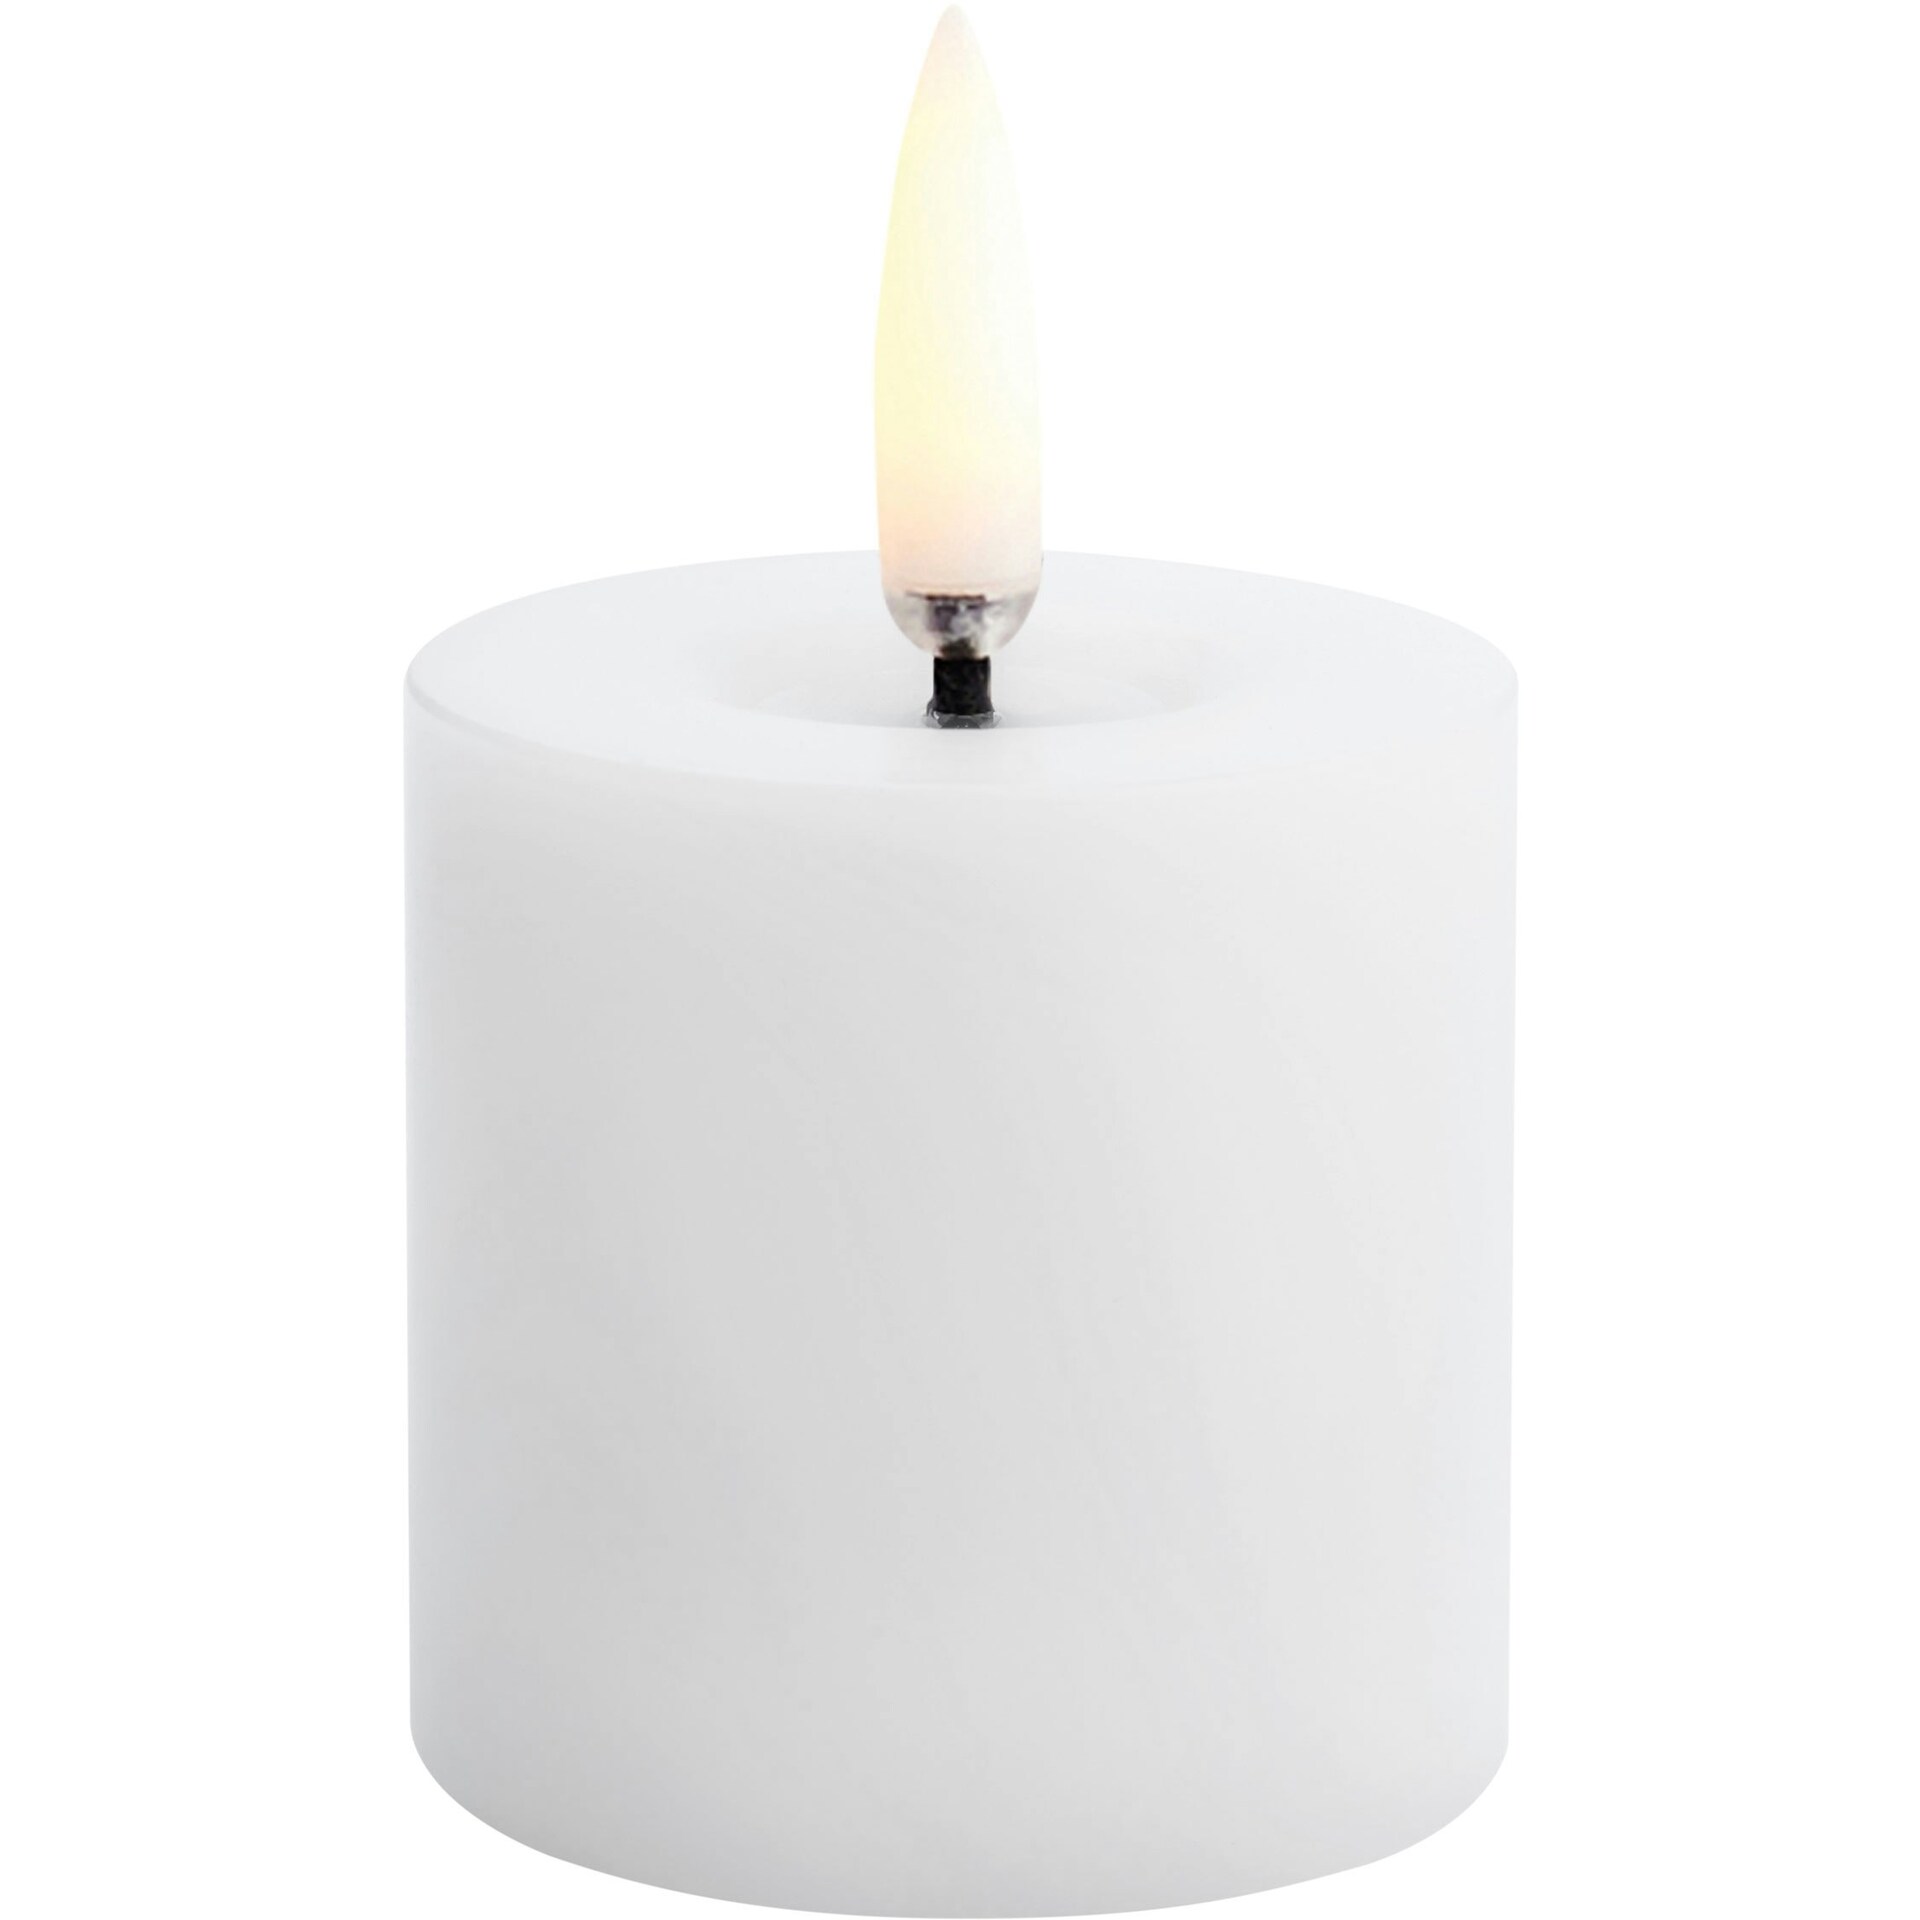 Uyuni LED Kubbelys Smeltet Nordic White, 5x4,5 cm White Virgin parafinvoks